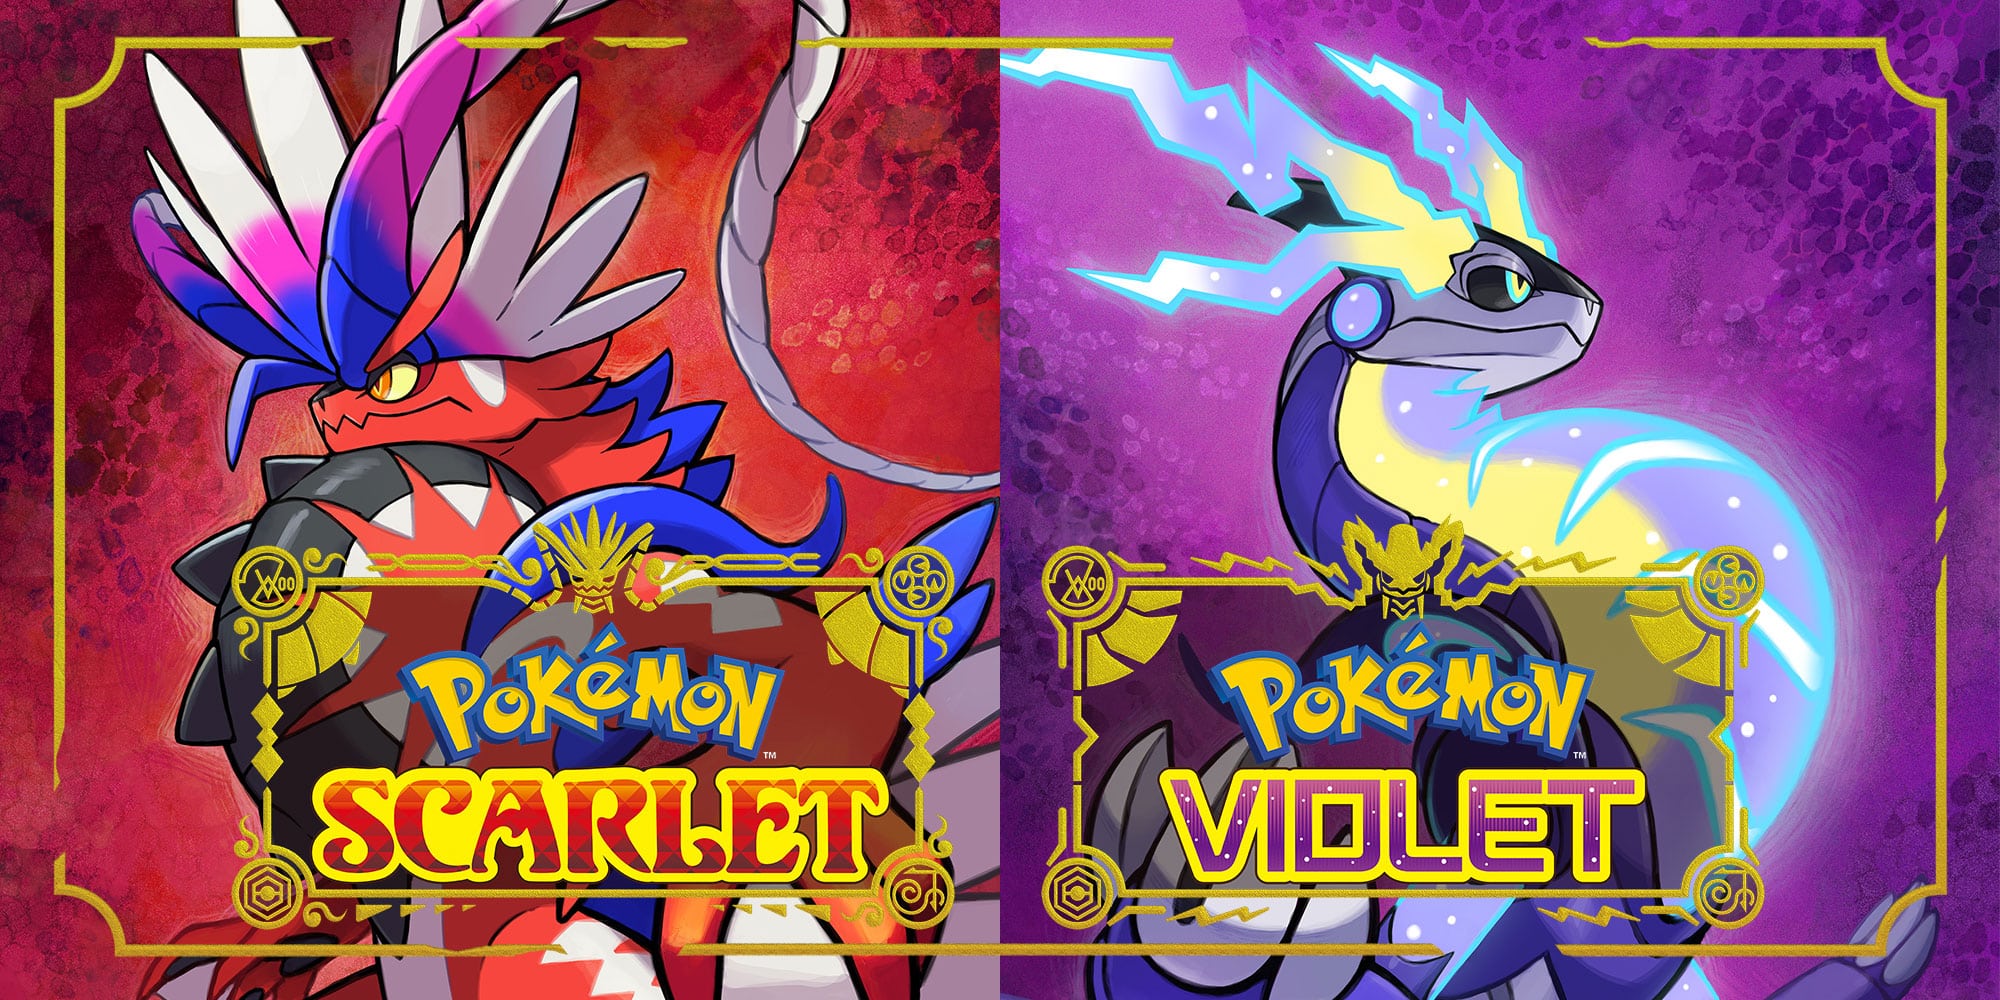 Pokémon Scarlet and Violet: An Honest Review